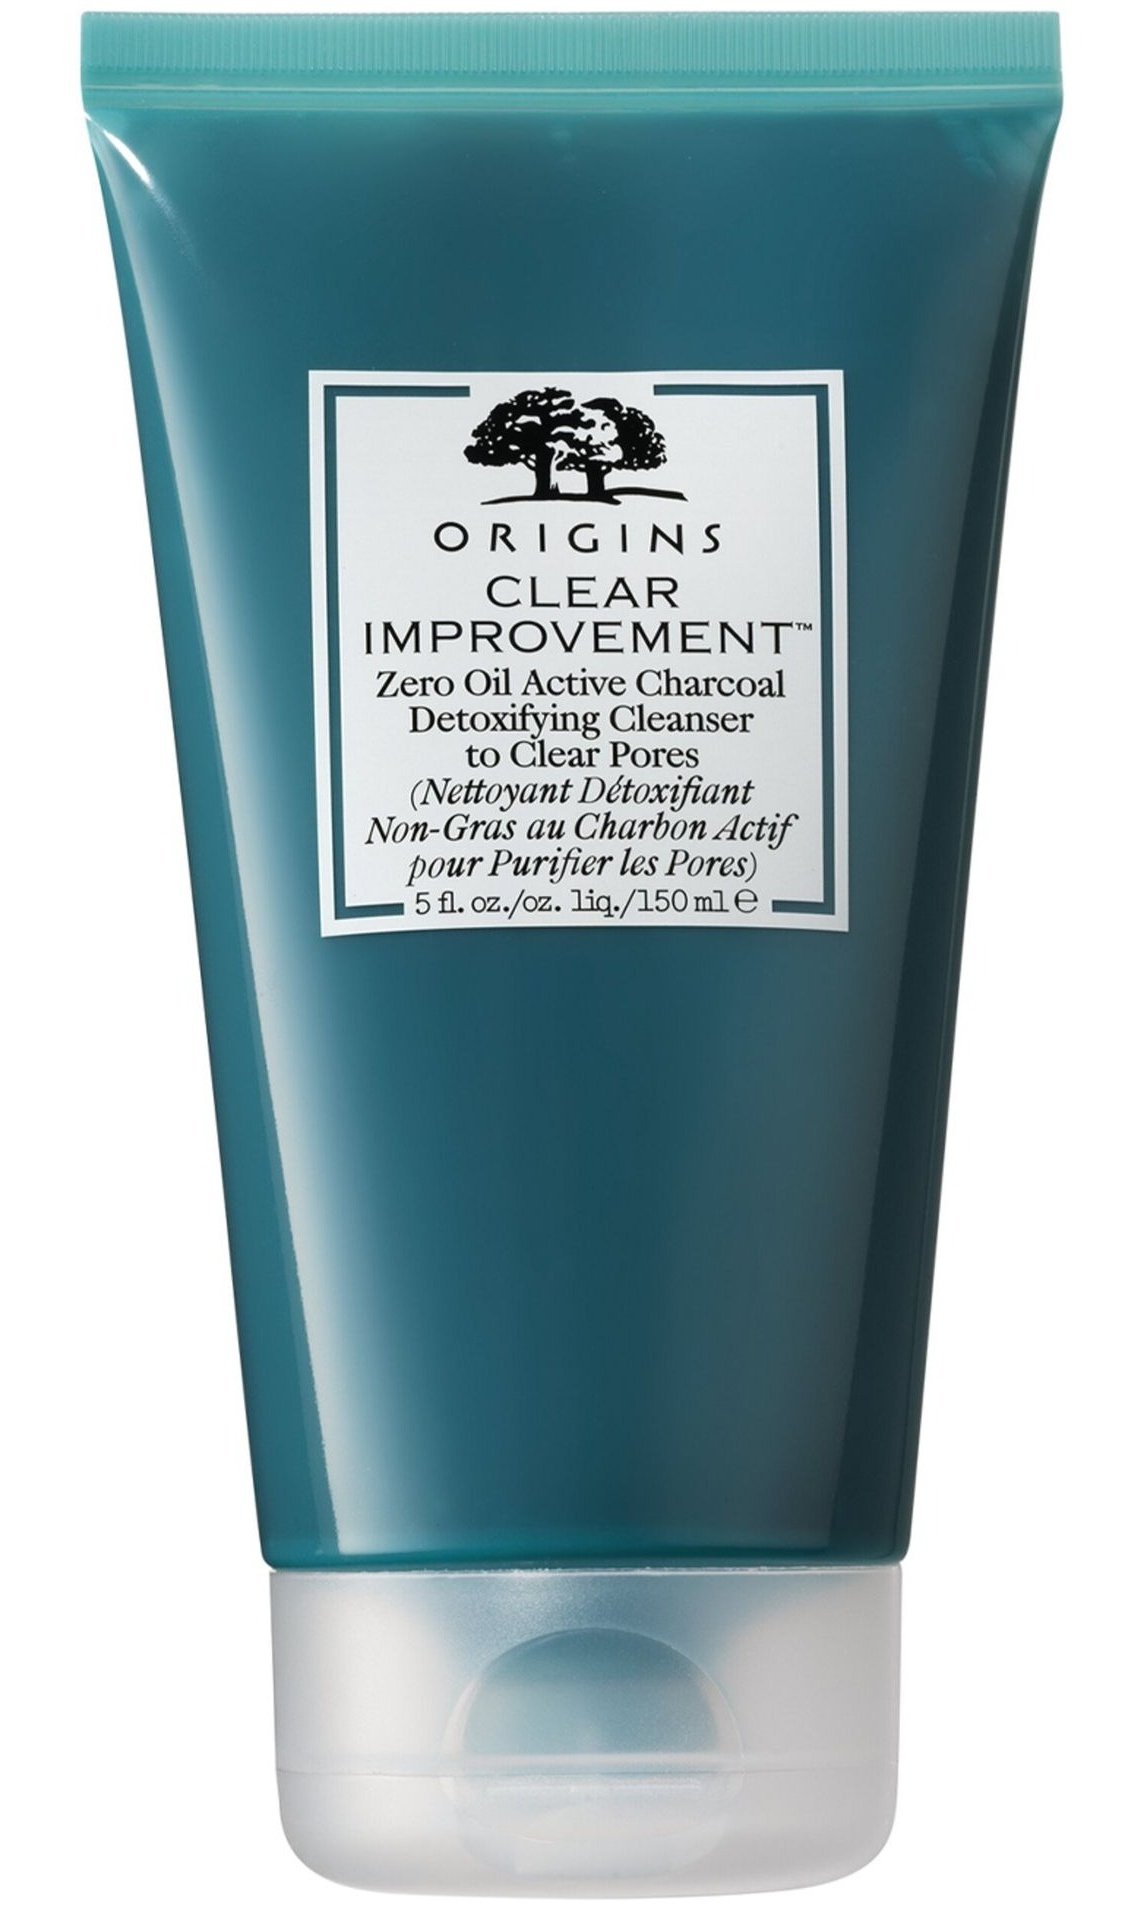 Origins Clear Improvement Zero Oil Active Charcoal Detoxifying Cleanser